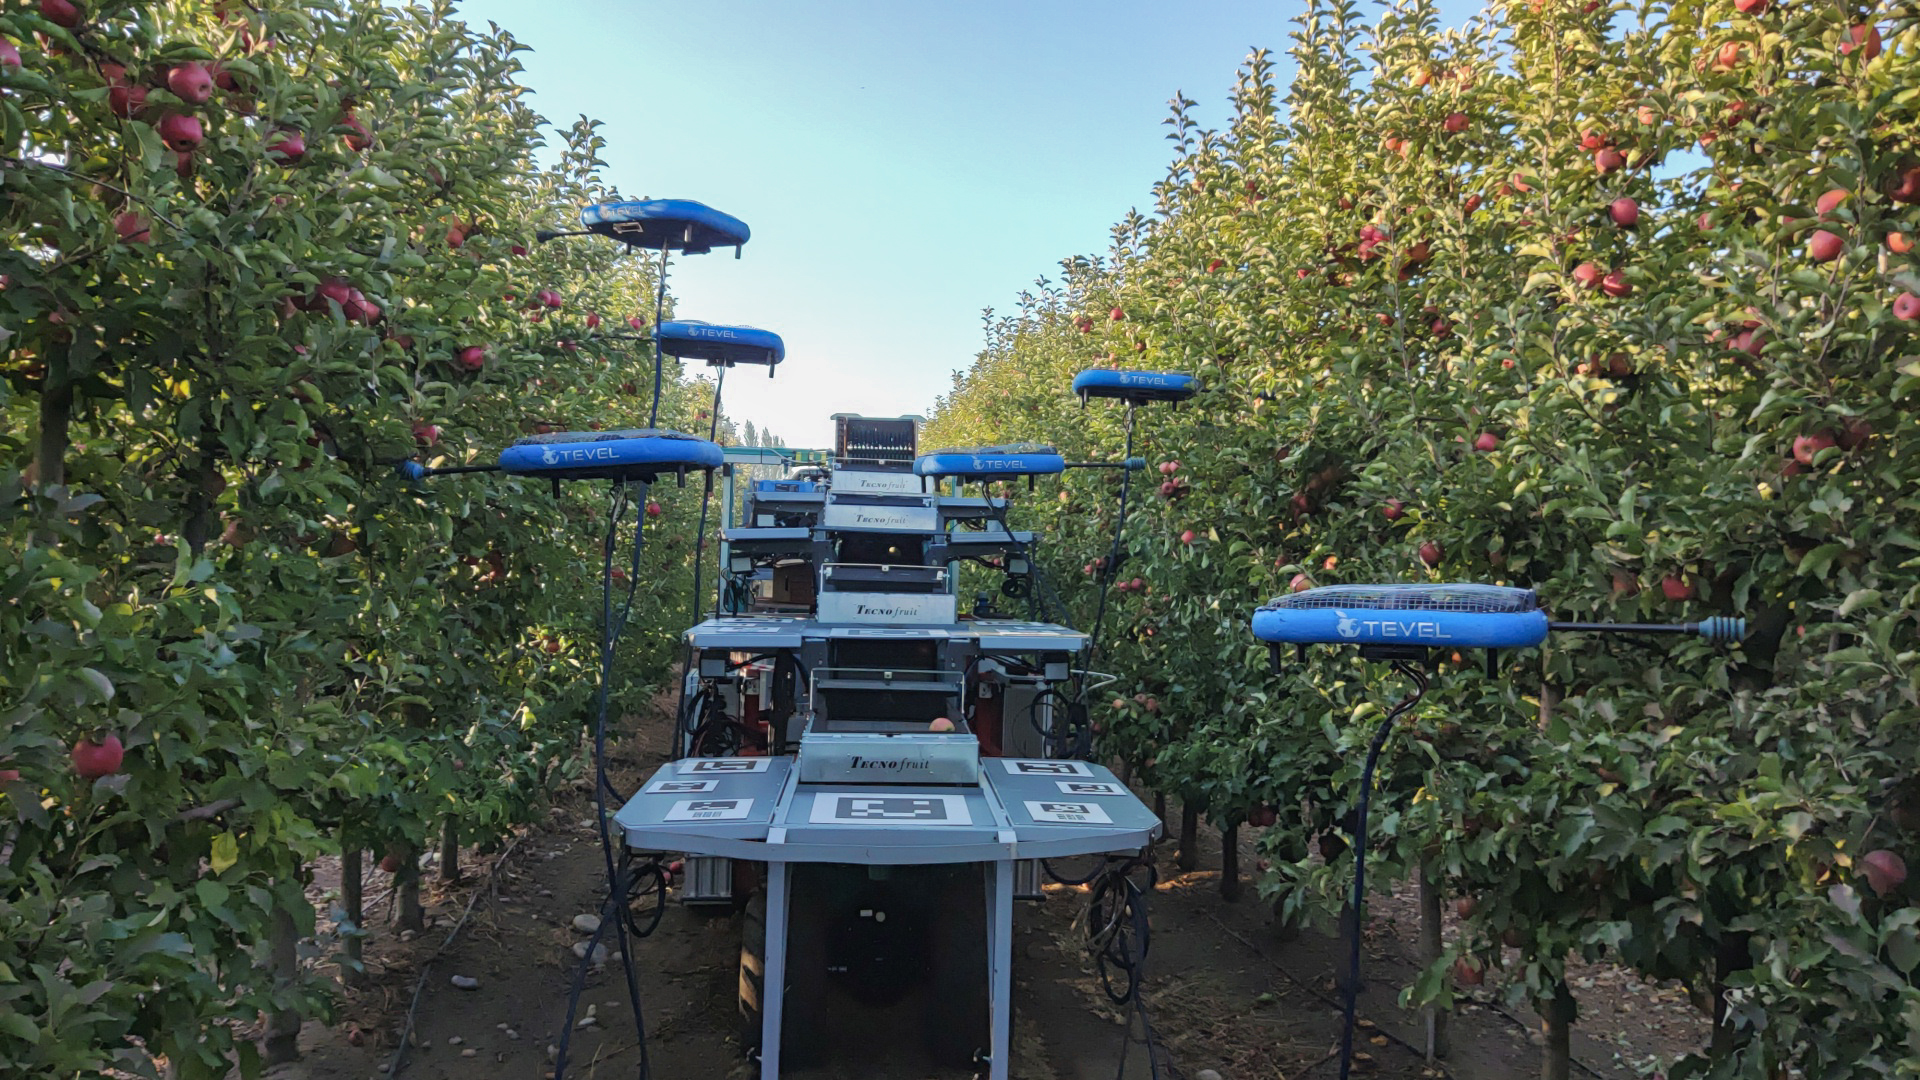 An AI/Drone apple-harvesting Robot